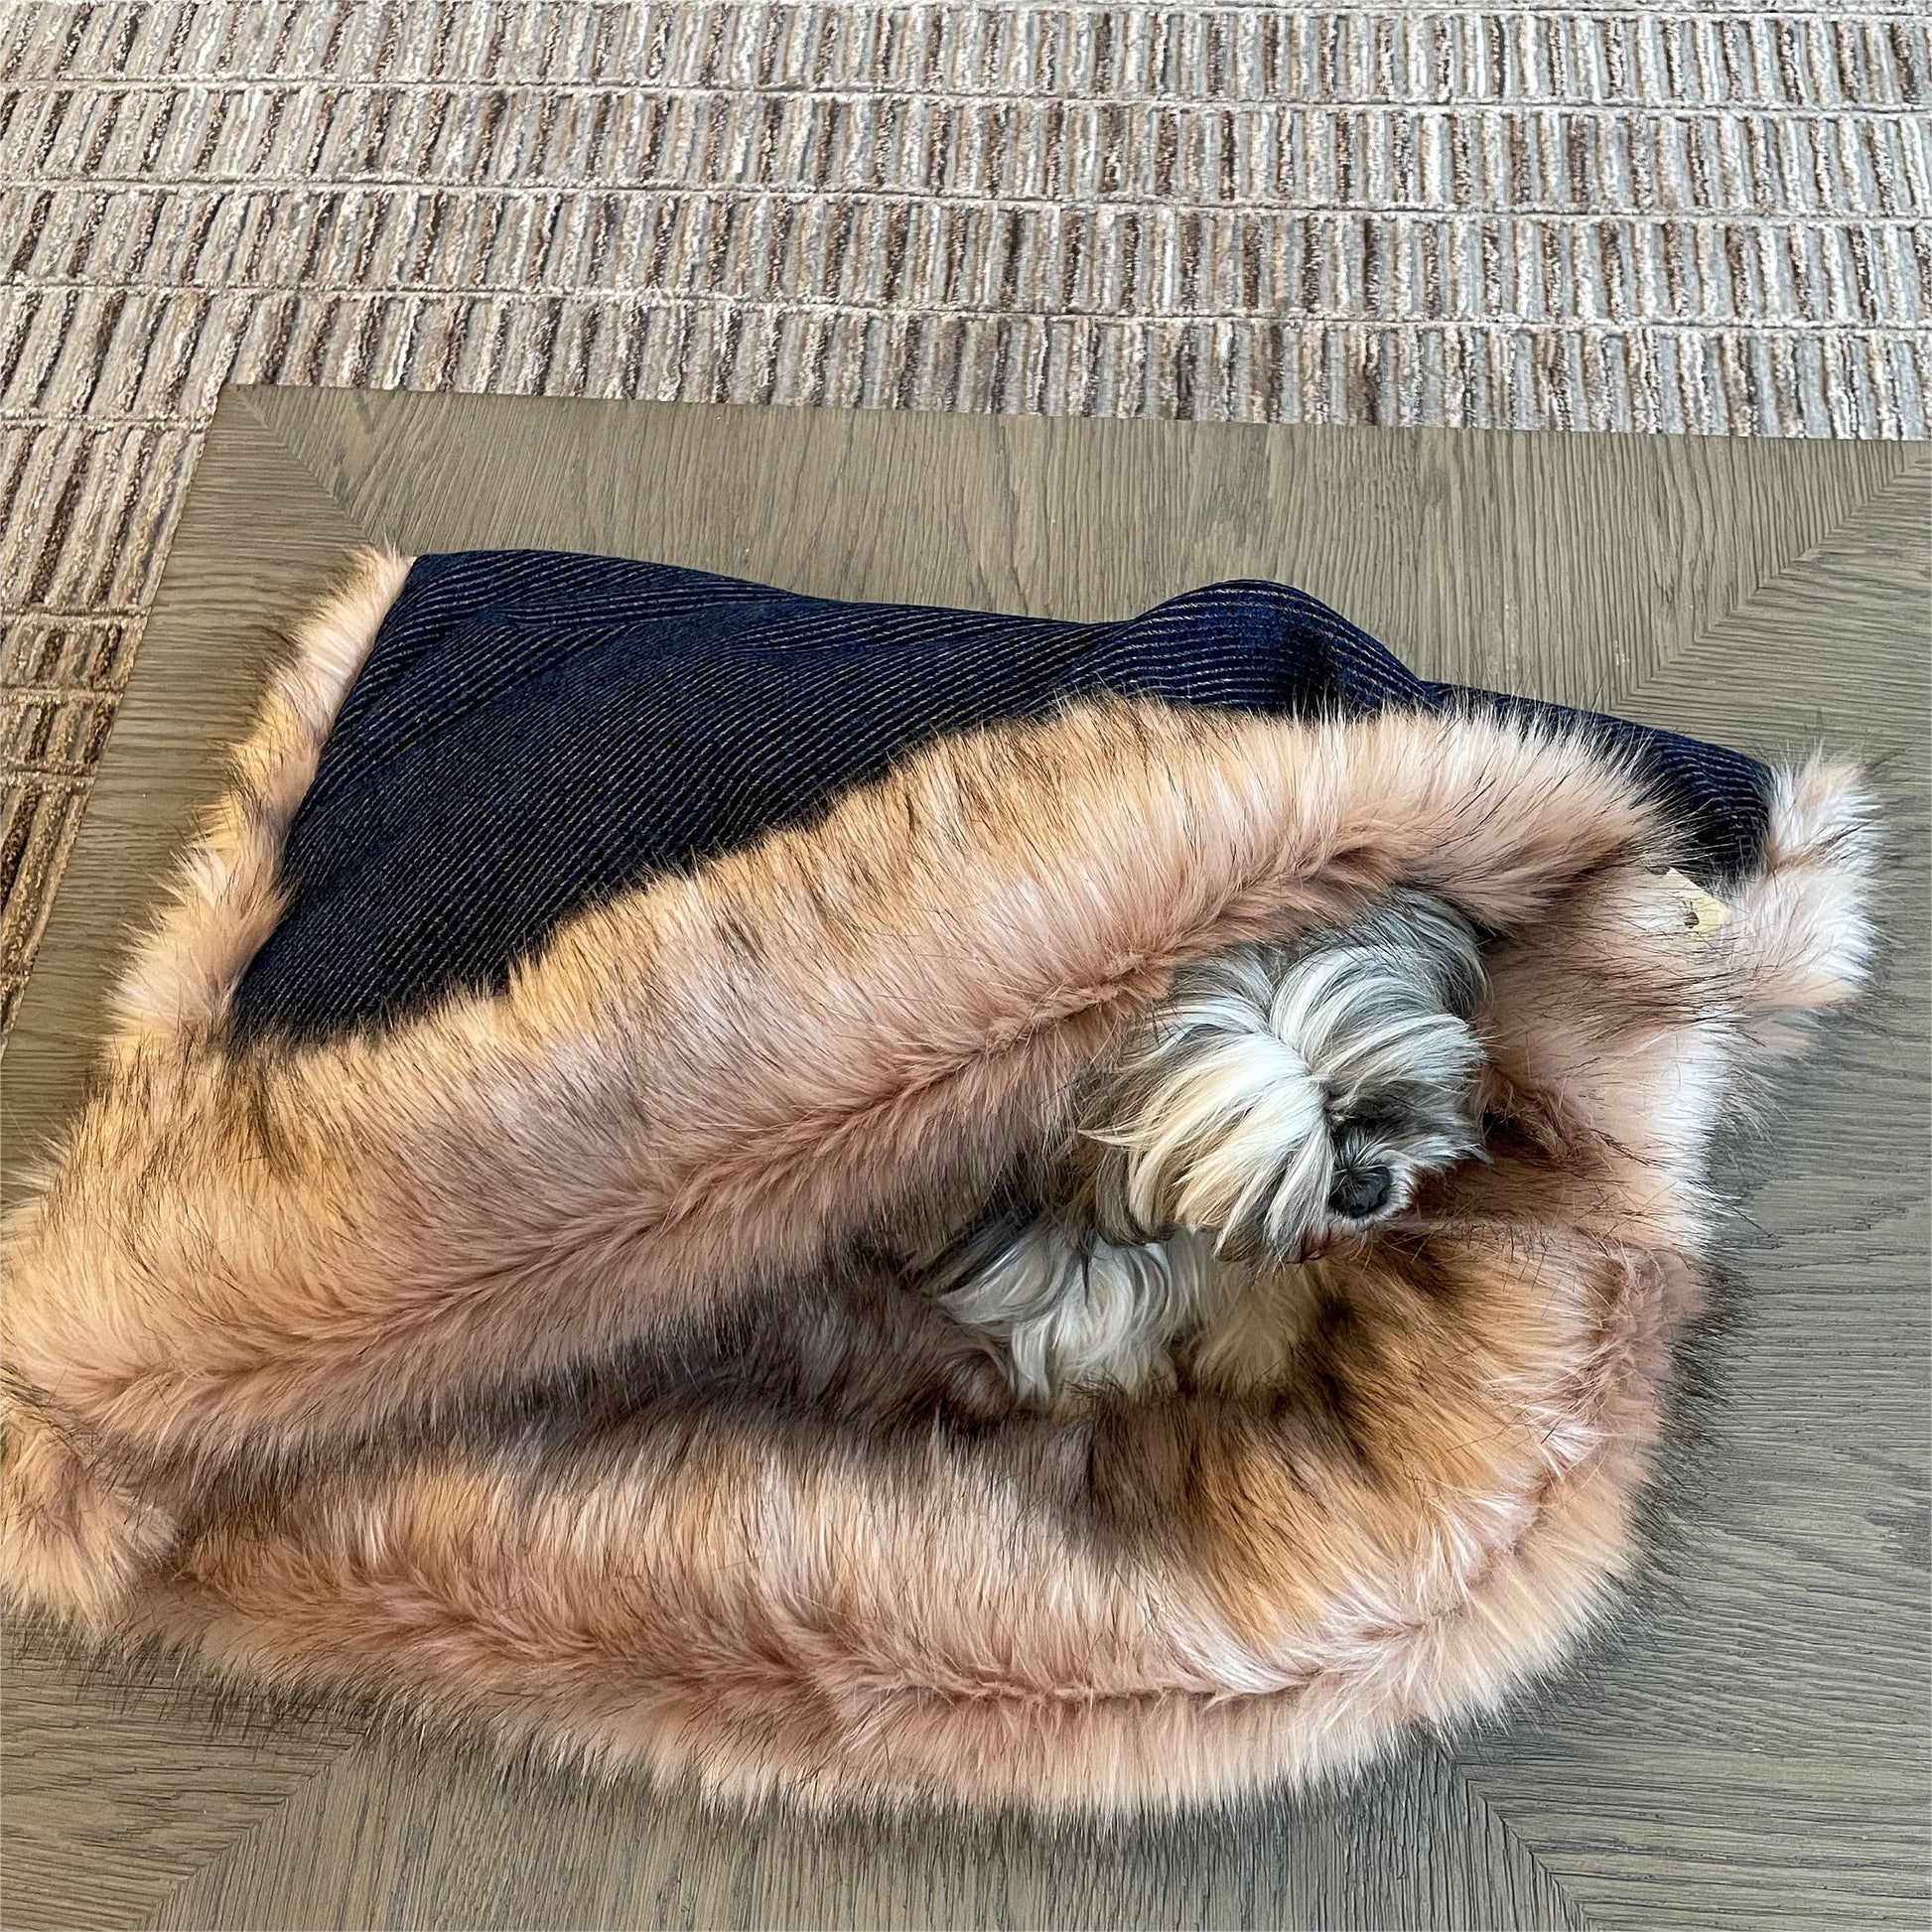 Handmade Luxury Snuggle Pet Bed